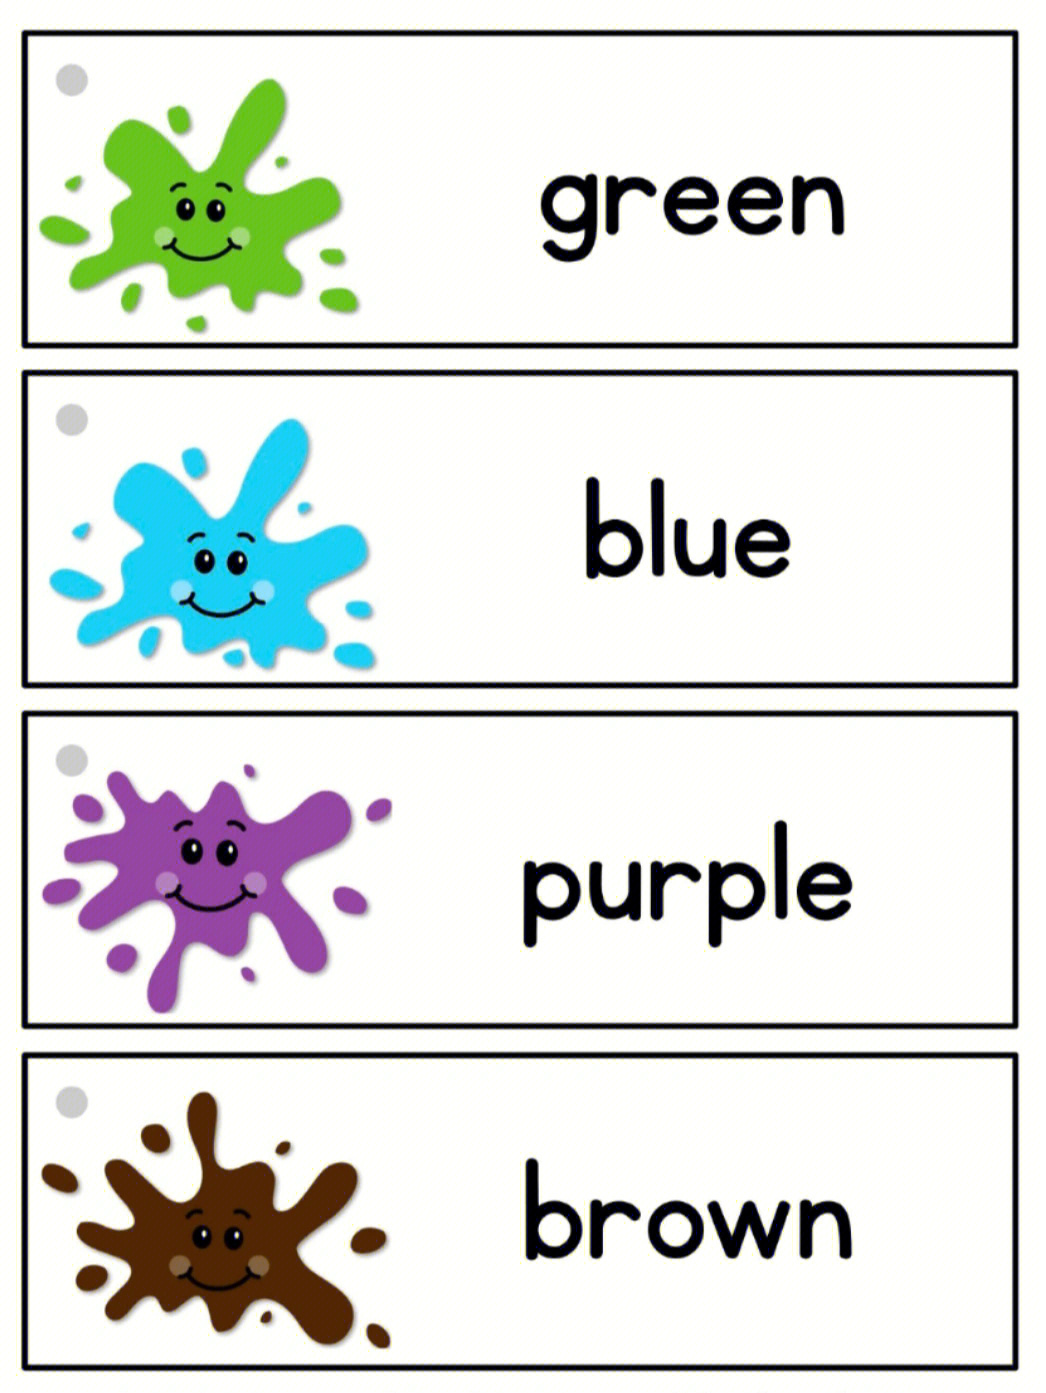 purple怎么读英语单词图片